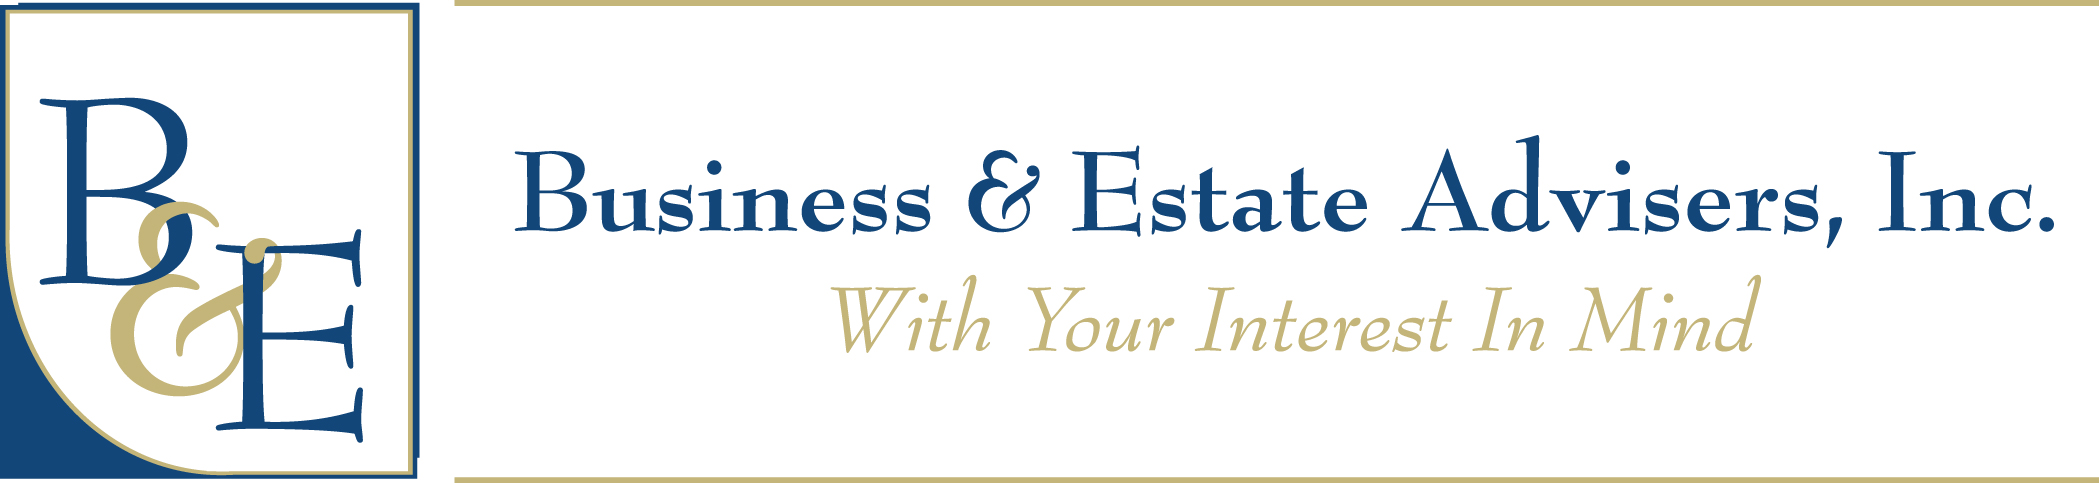 Business & Estate Advisers, Inc.